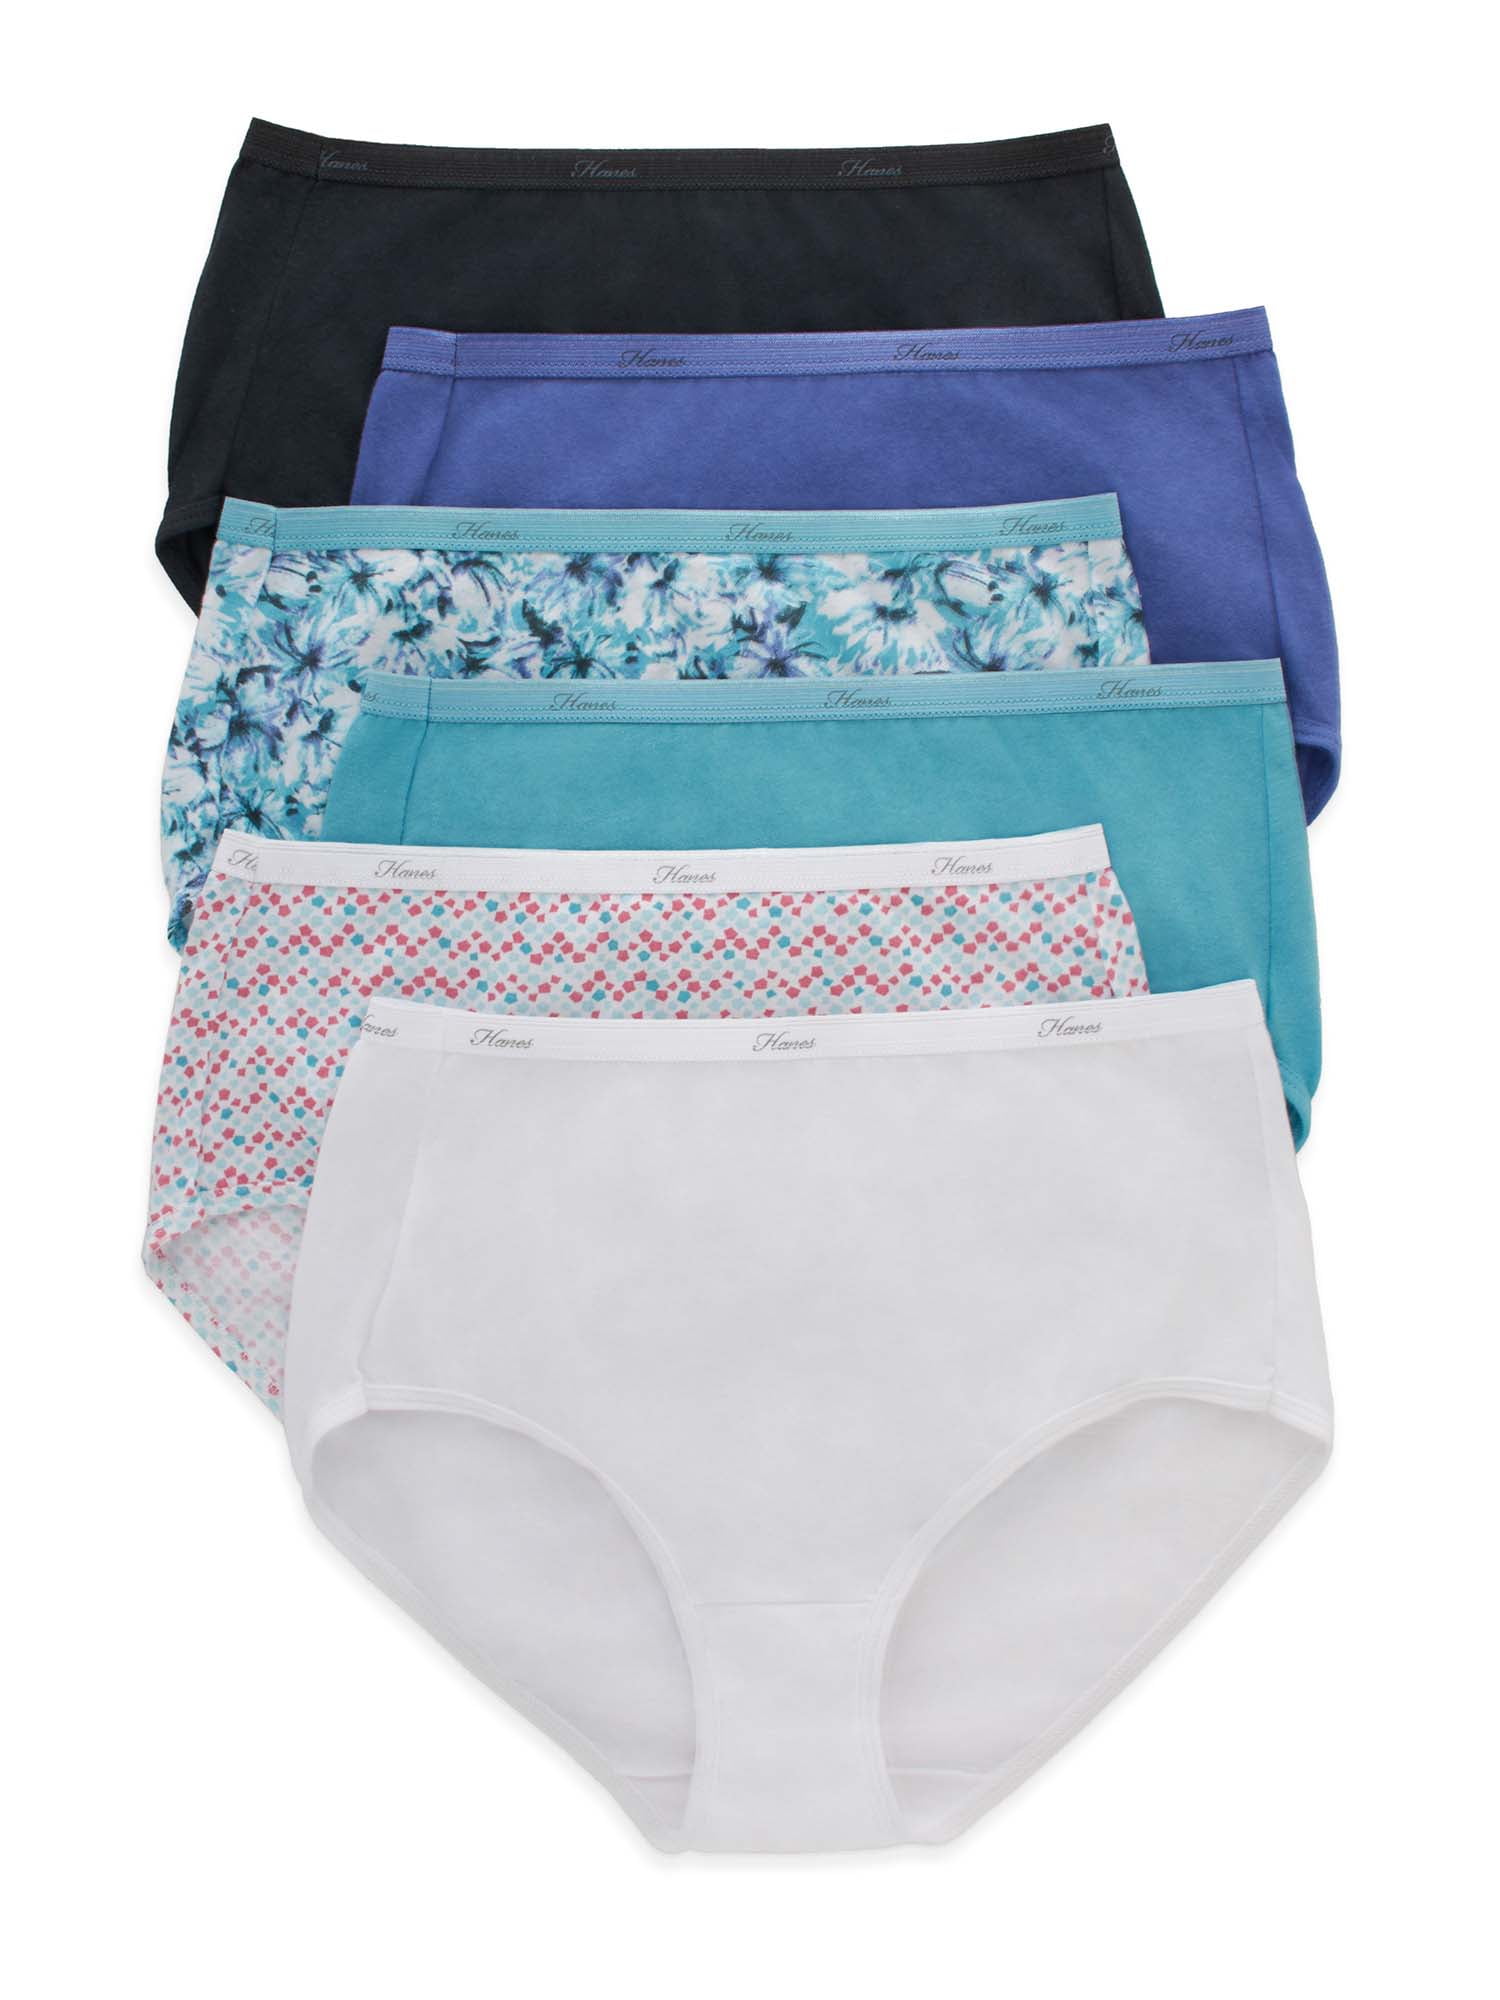 Hanes, Intimates & Sleepwear, Hanes Womens Boy Shorts Panties Cotton 6  Pack Size 7